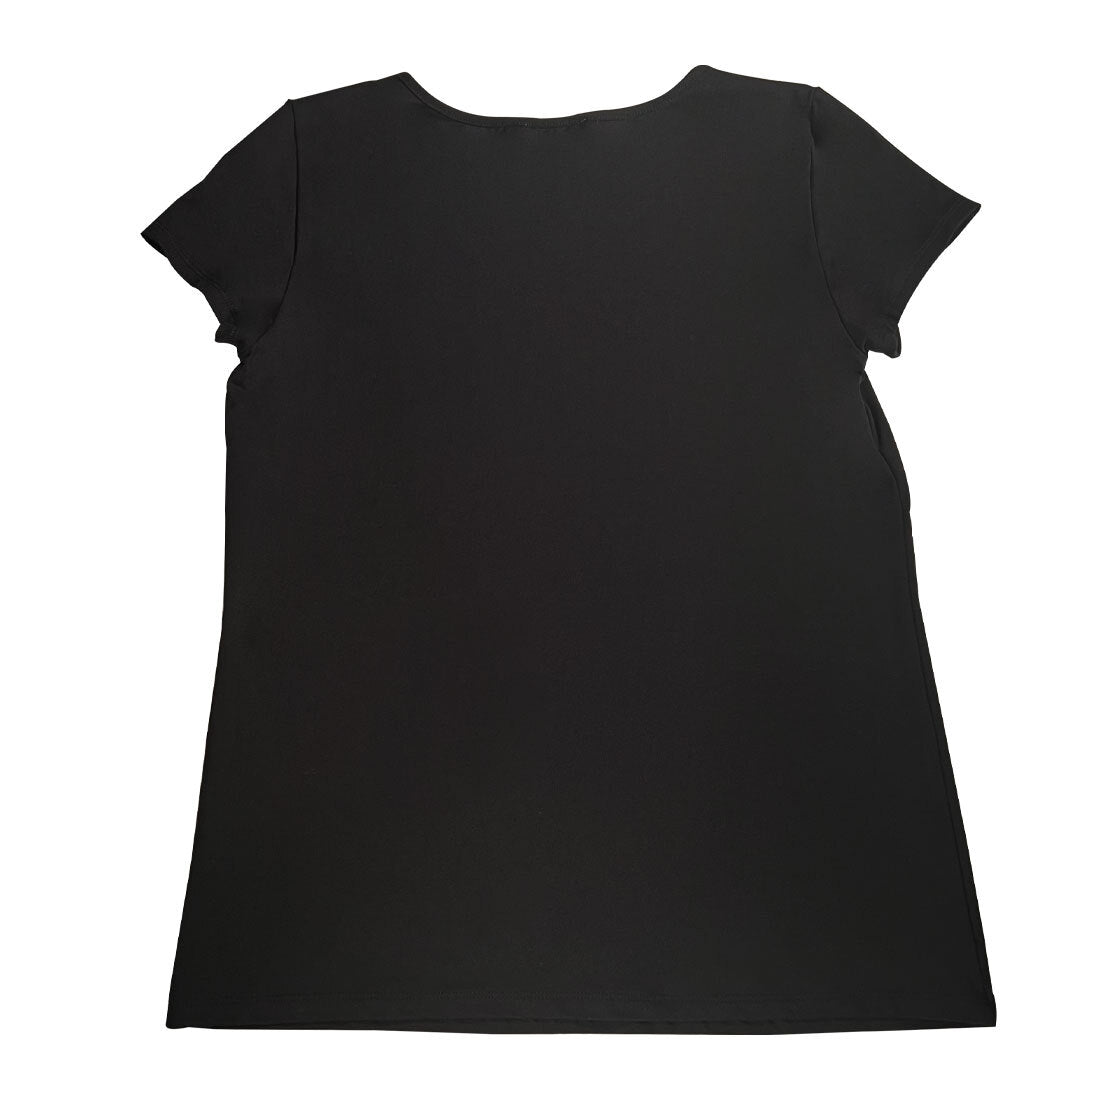 V shape T shirt Price - 3000ks - Thiri online shopping